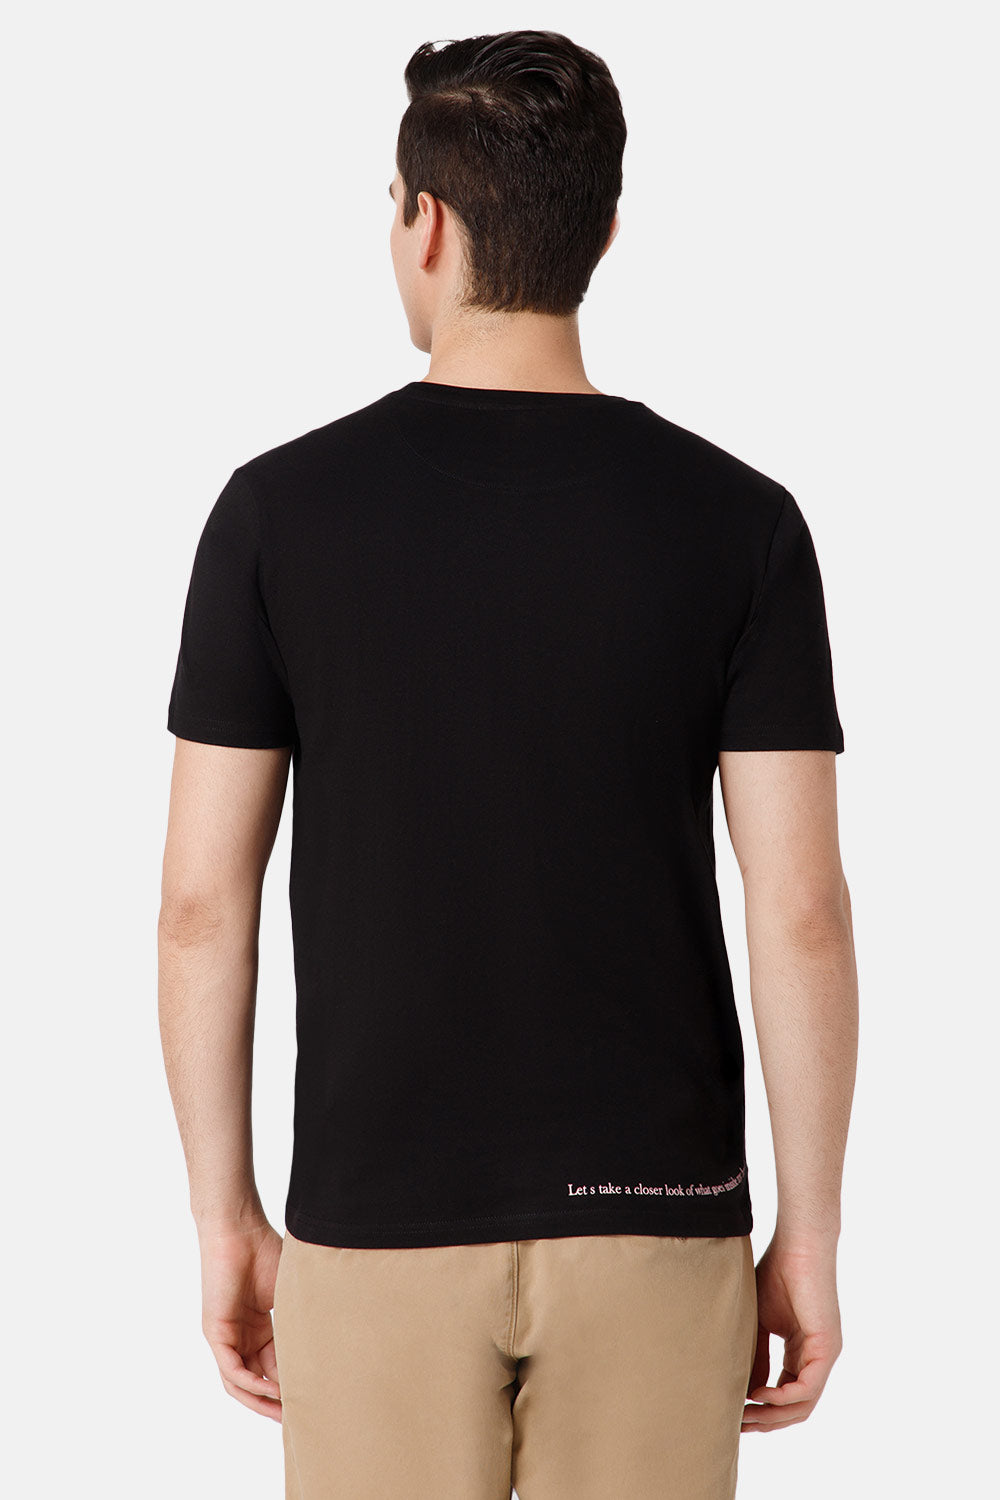 Enhance Printed Crew Neck Men's Casual T-Shirts - Black - TS30